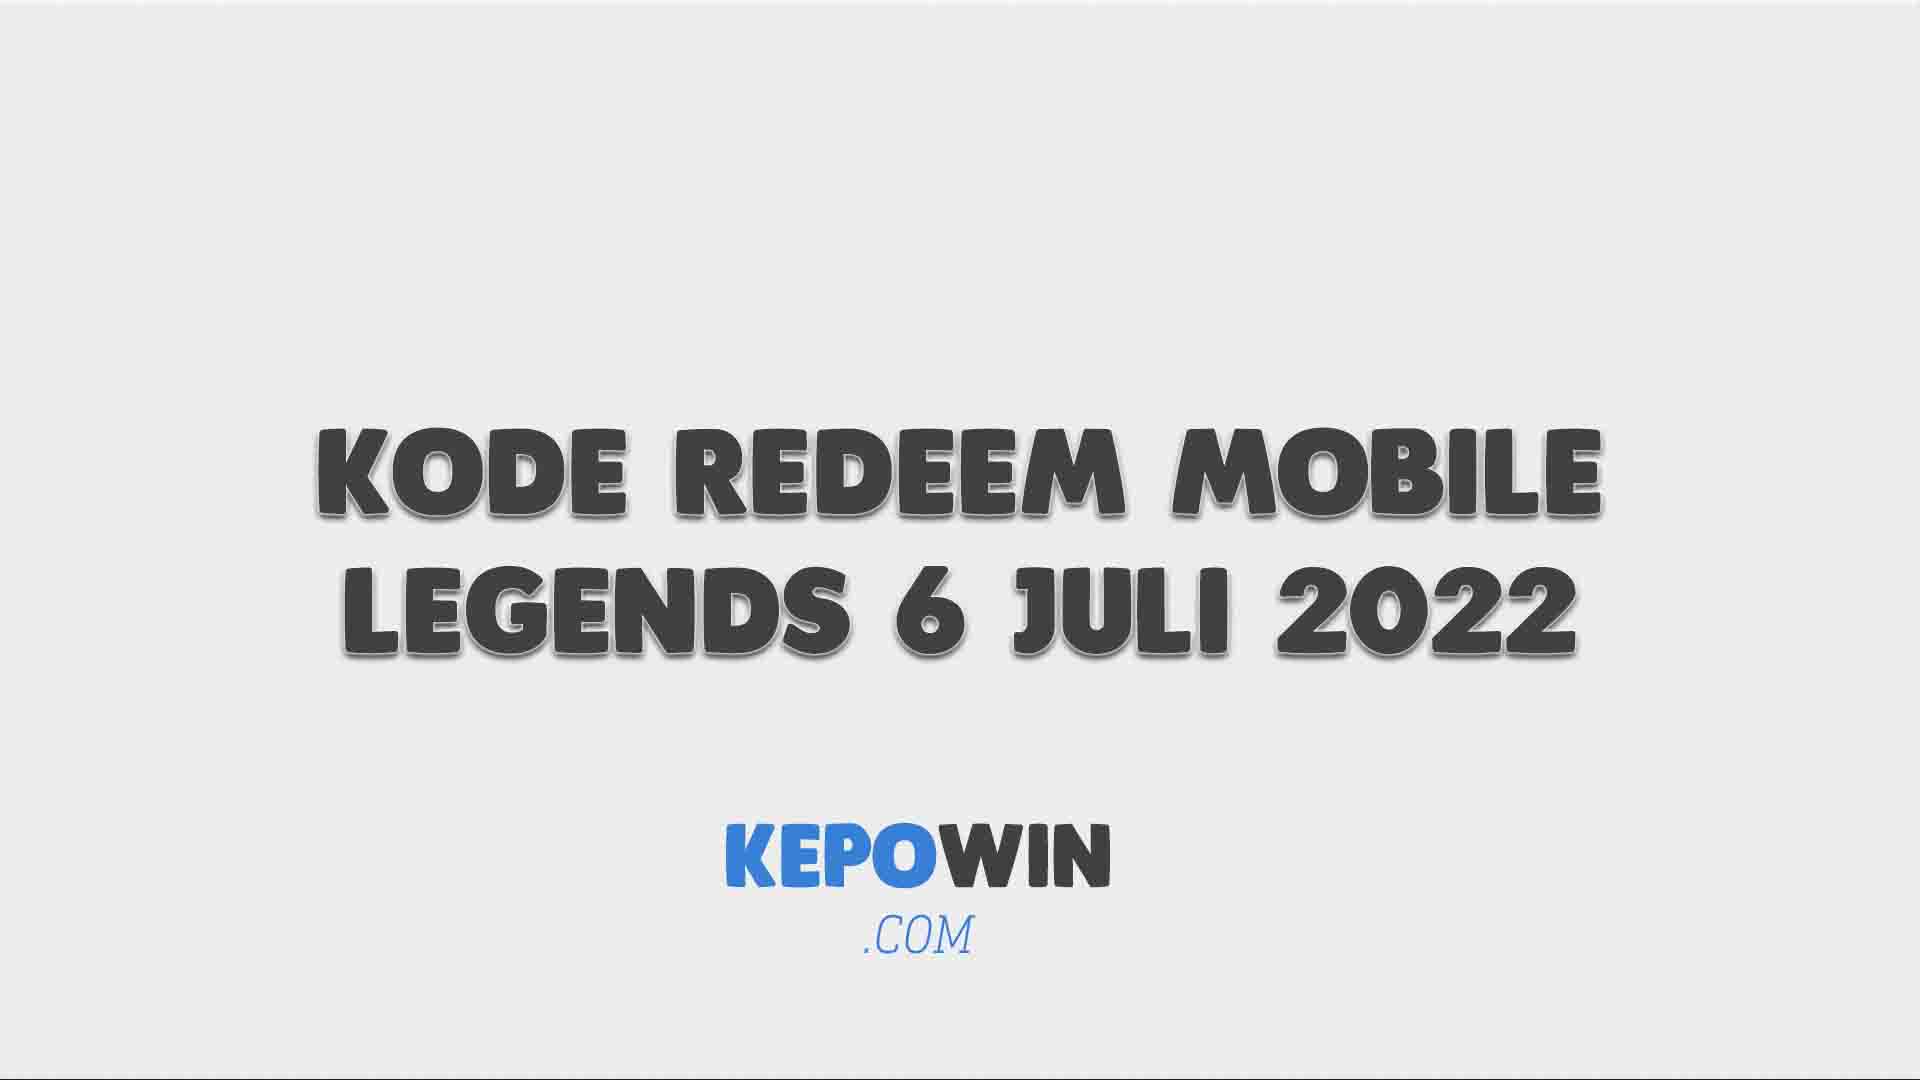 Kode Redeem Mobile Legends 6 Juli 2022